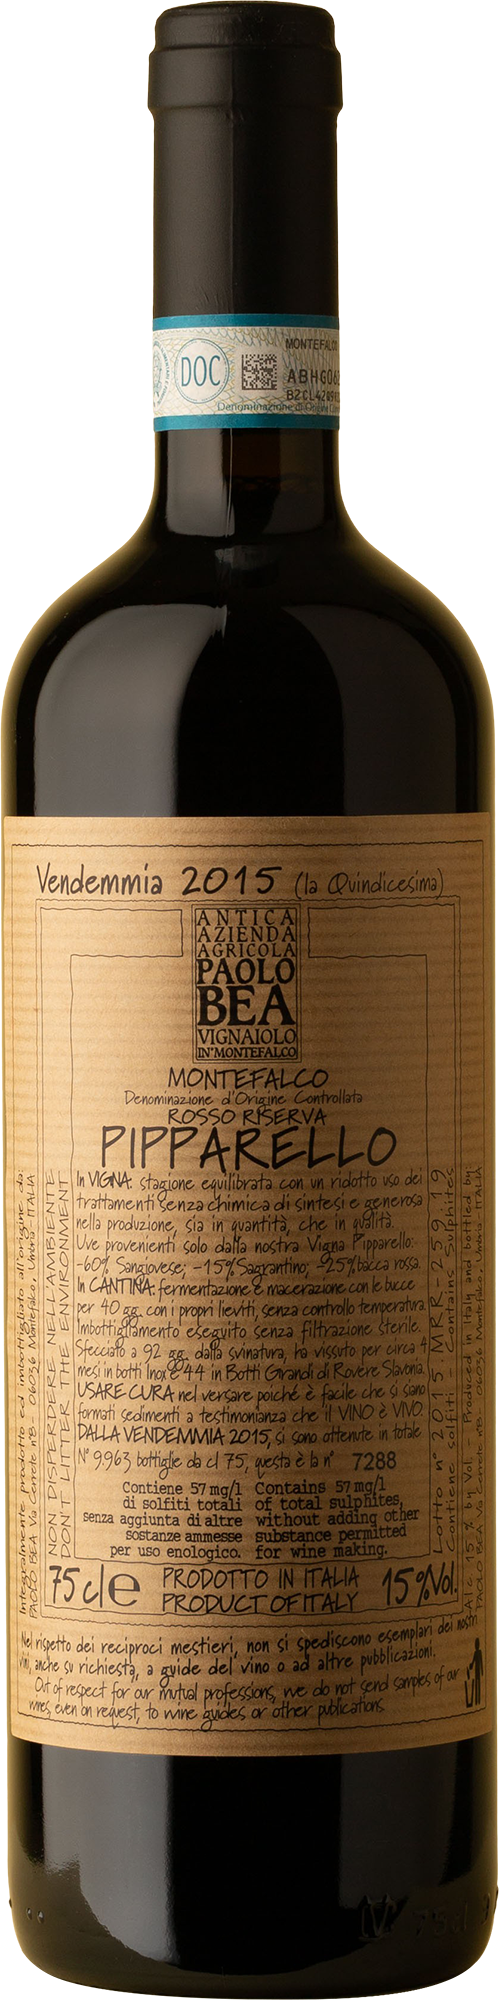 Paolo Bea - Pipparello Sangiovese Blend 2015 Red Wine